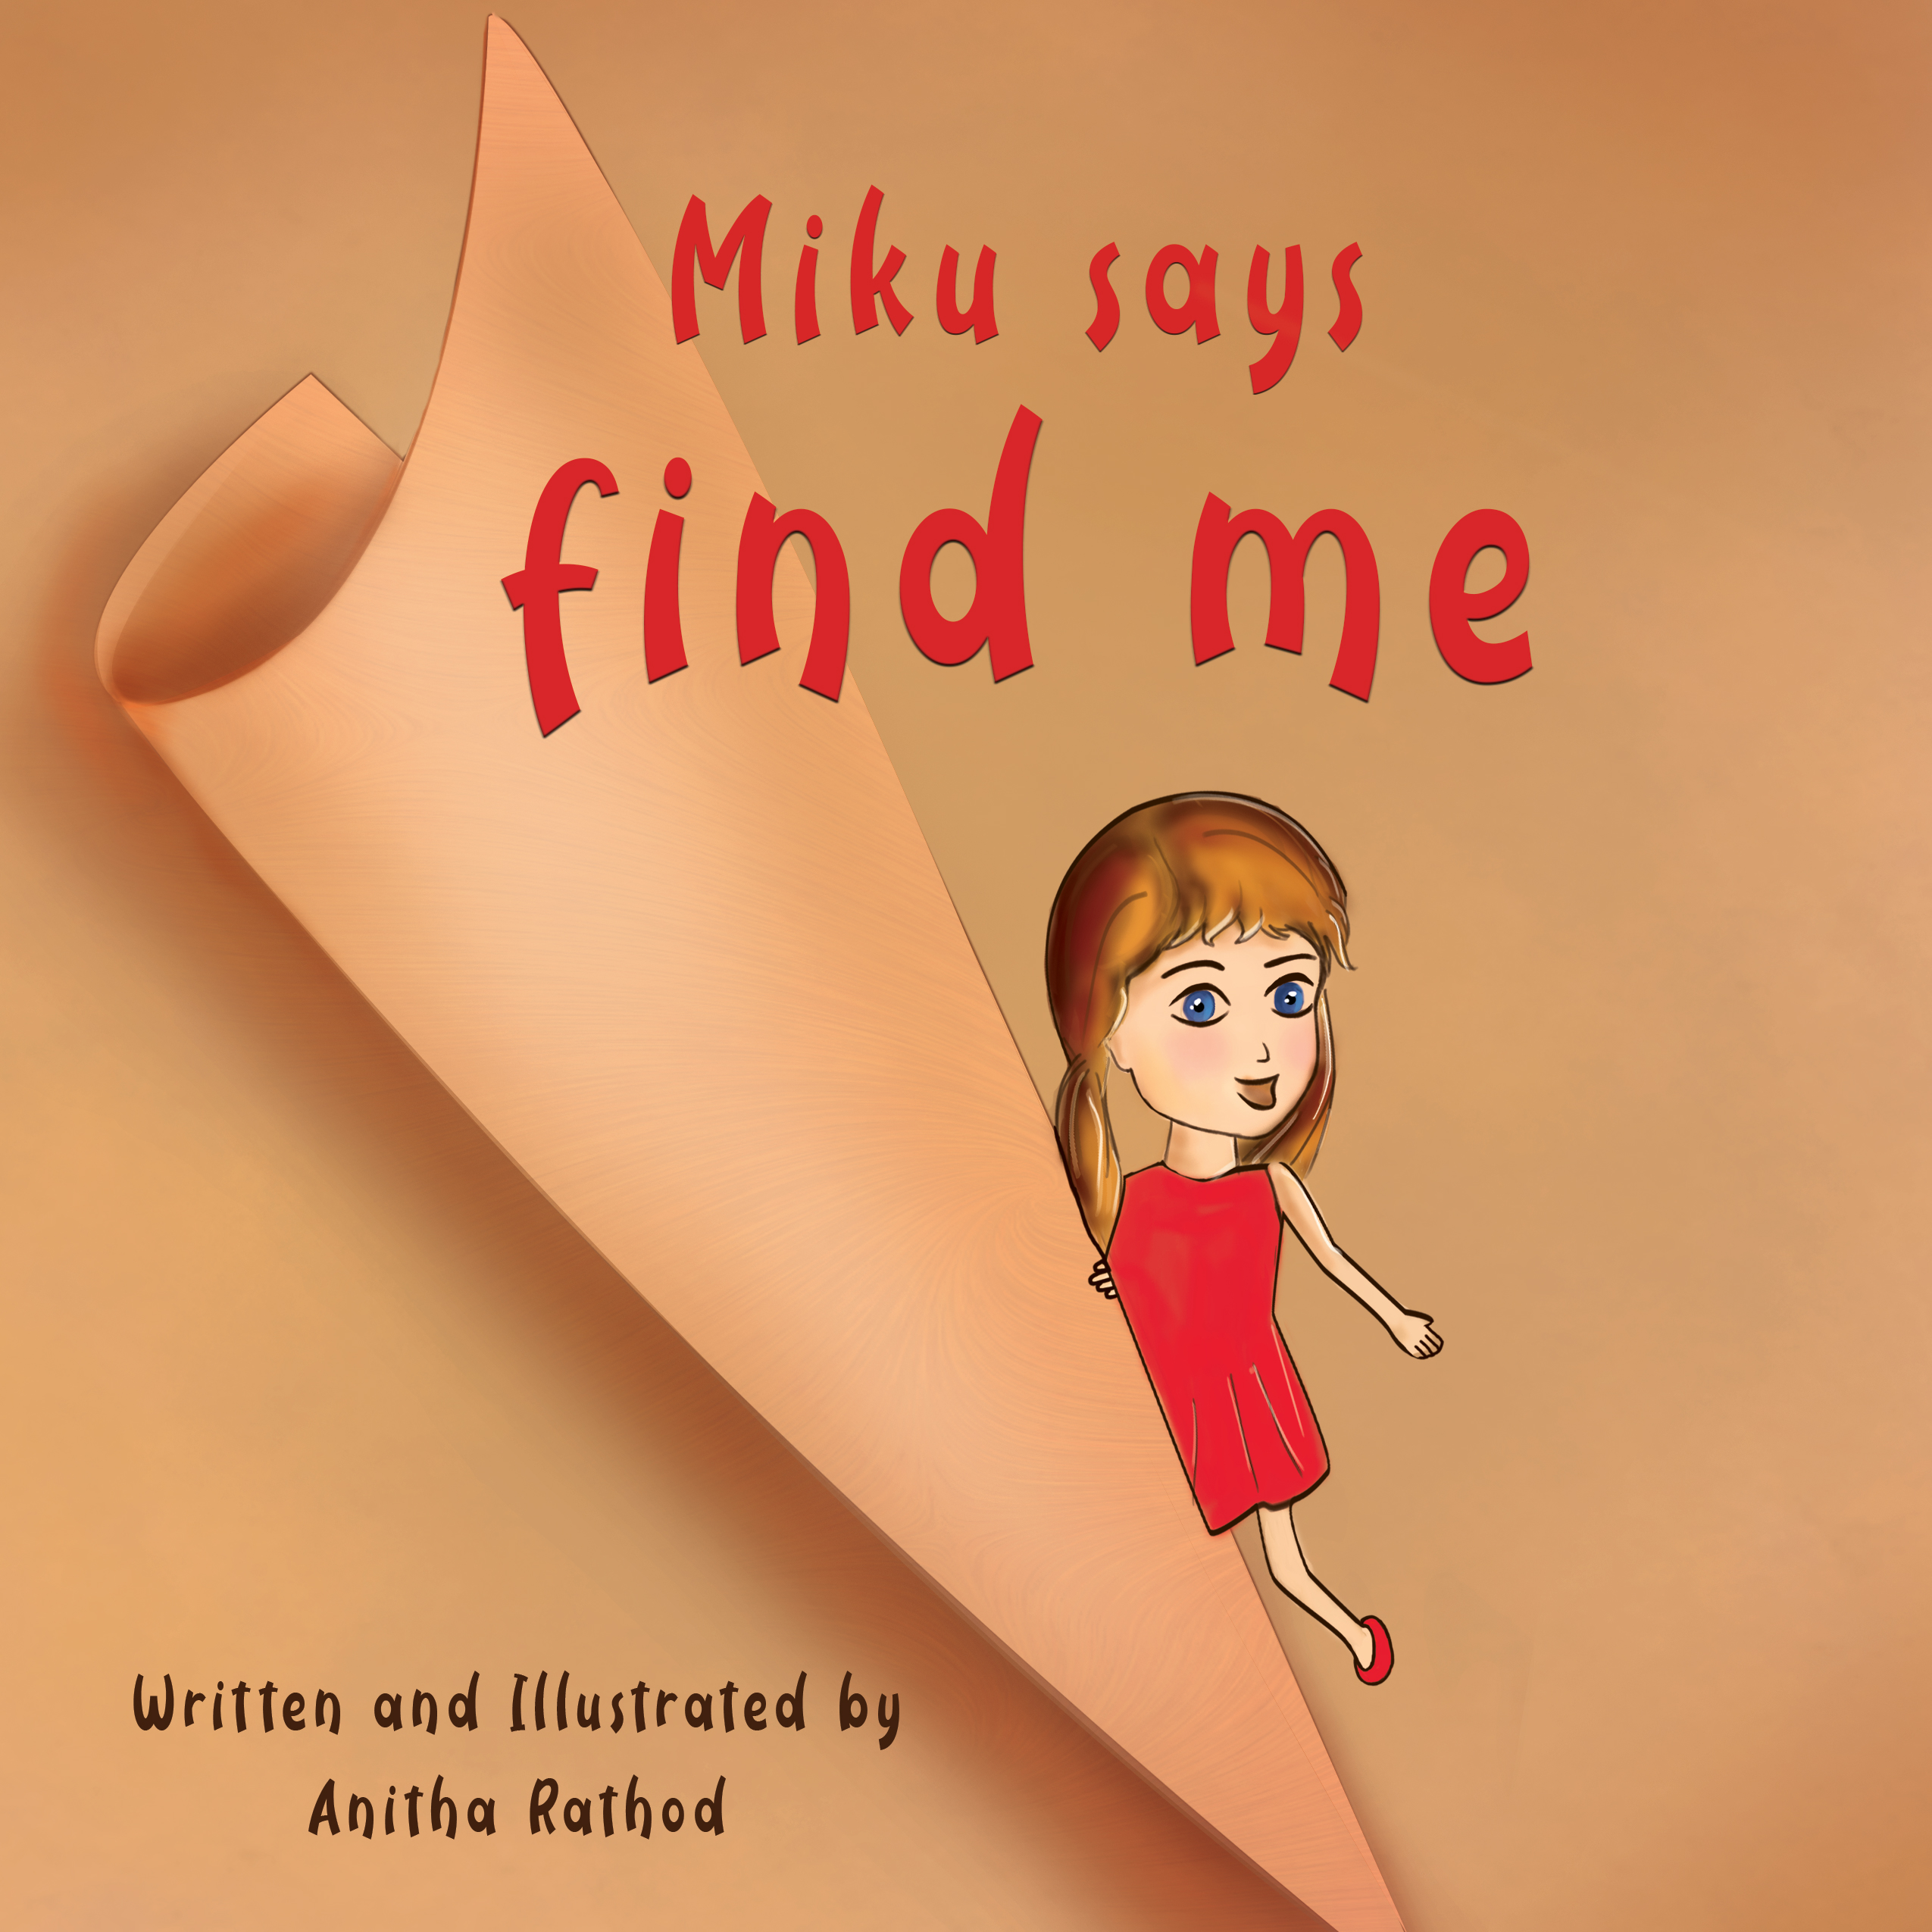 FREE: Miku says find me by Anitha Rathod